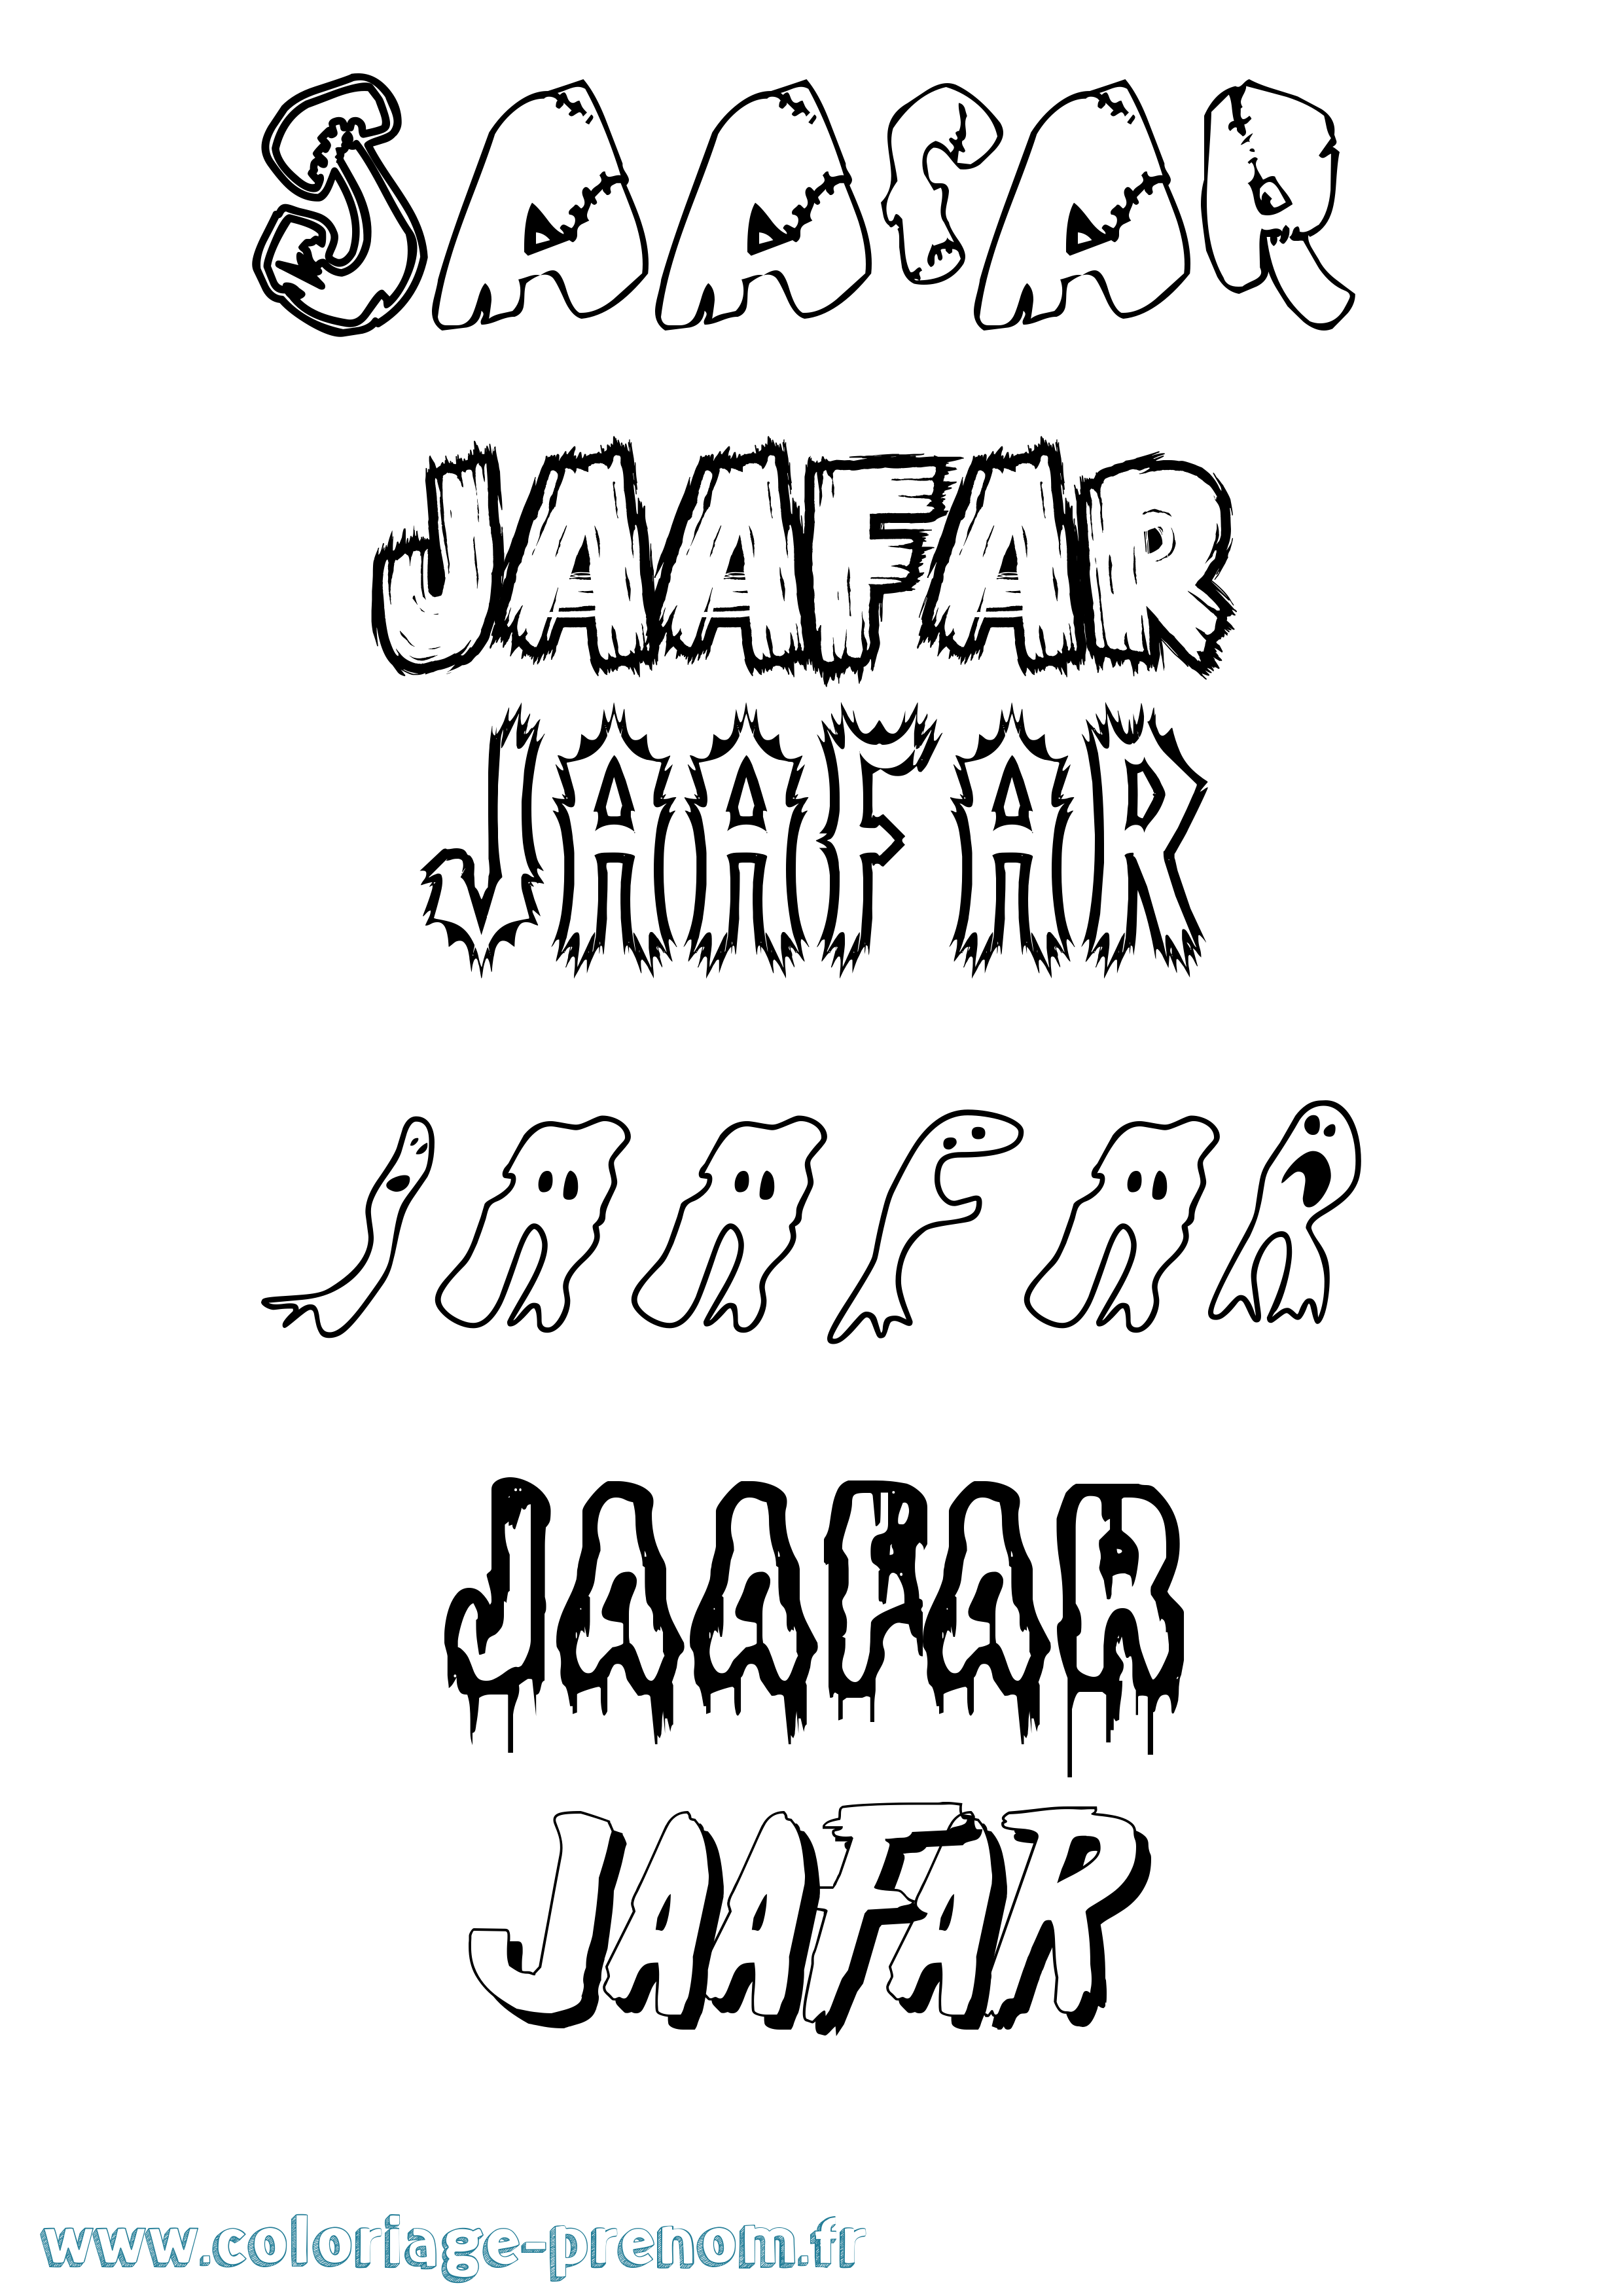 Coloriage prénom Jaafar Frisson